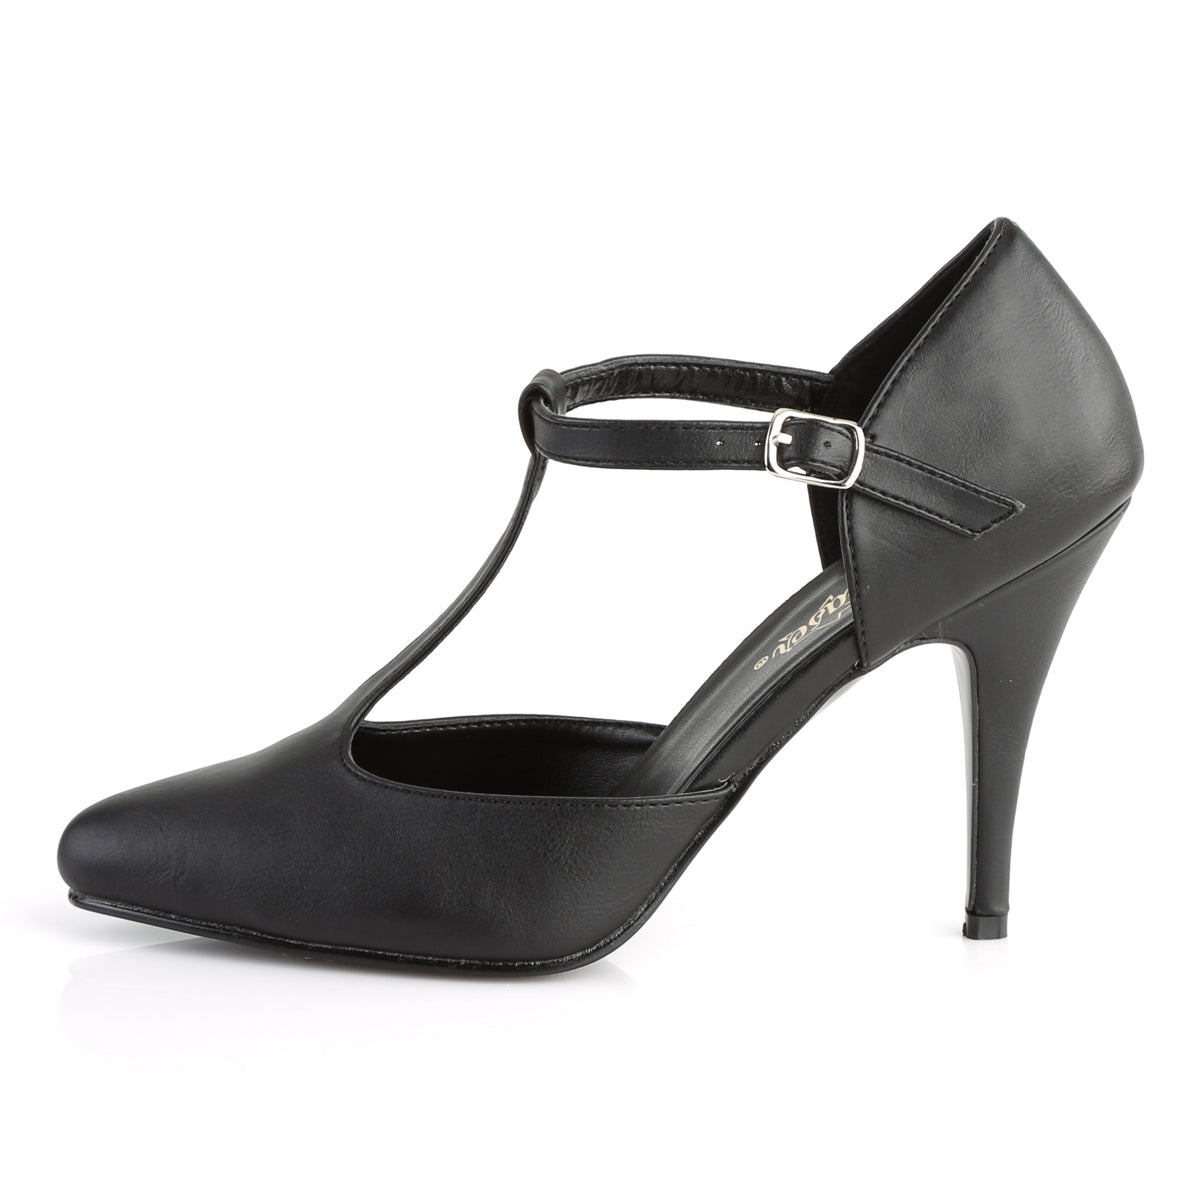 VANITY-415 Pleaser Shoes 4 Inch Heel Black Fetish Footwear-Pleaser- Sexy Shoes Pole Dance Heels